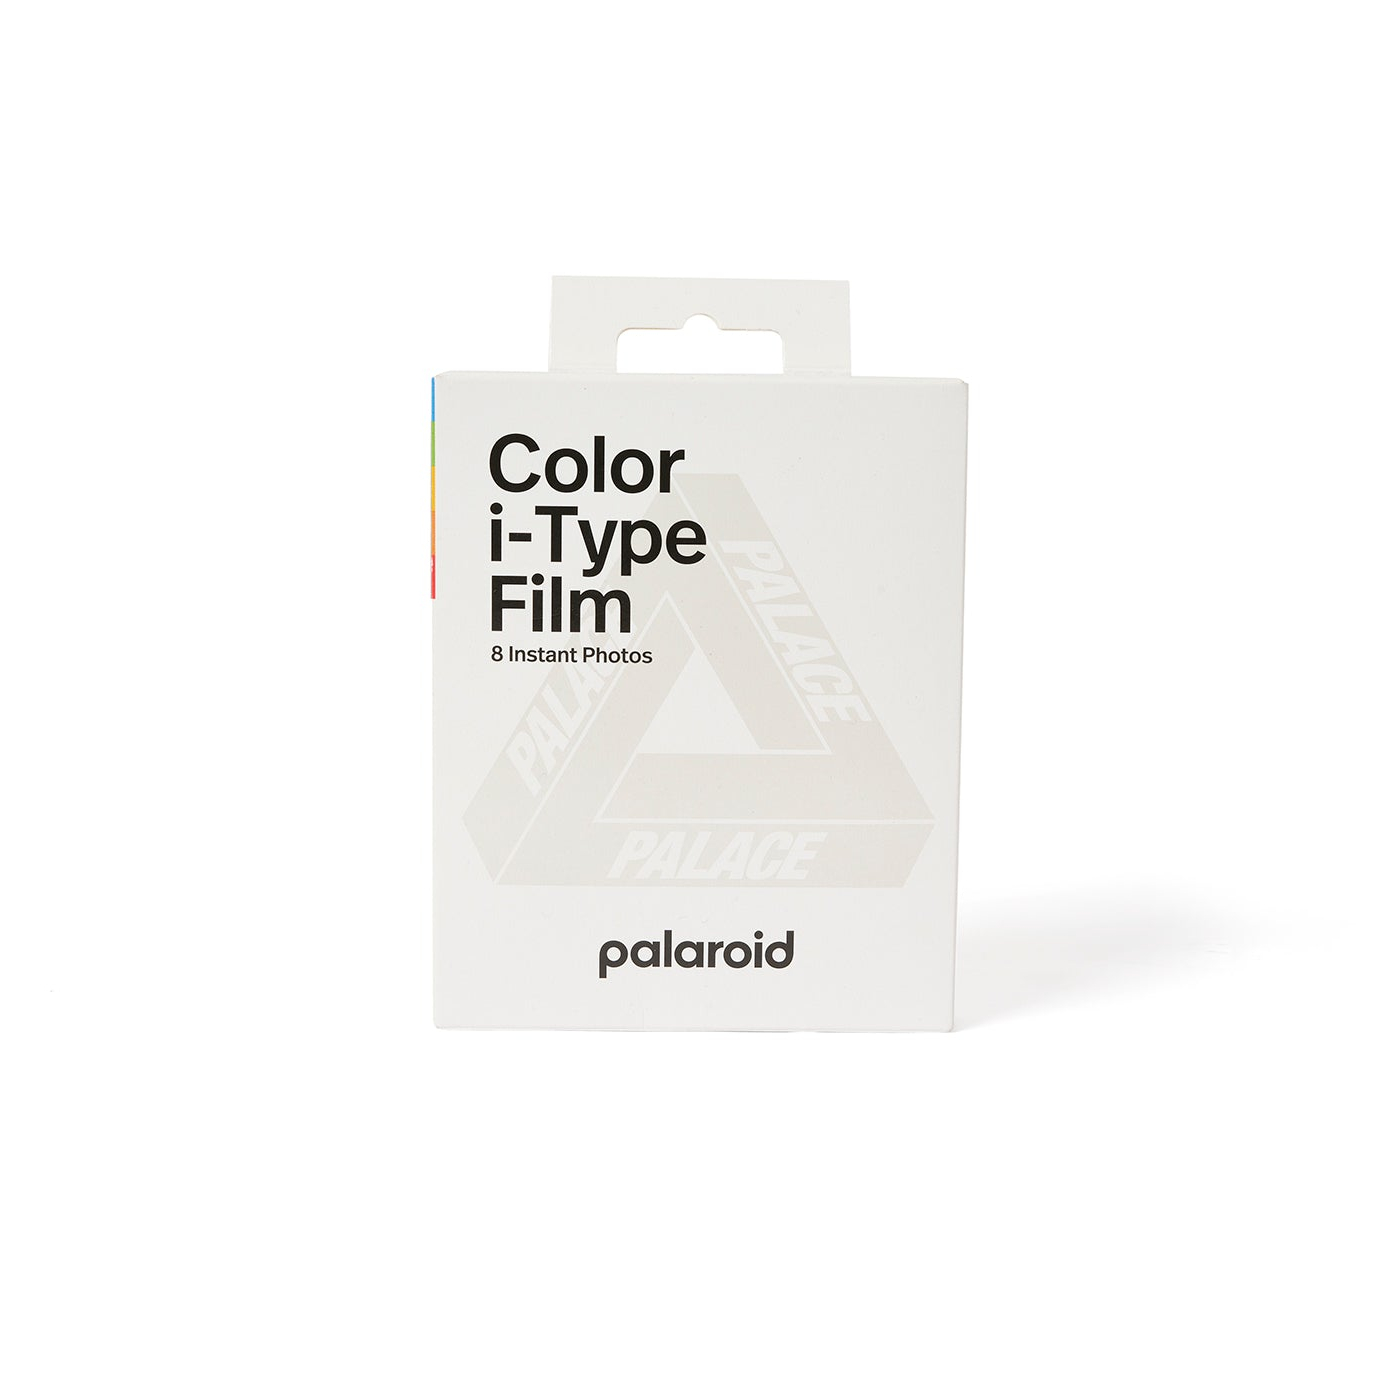 Thumbnail PALACE POLAROID COLOR I-TYPE FILM WHITE one color